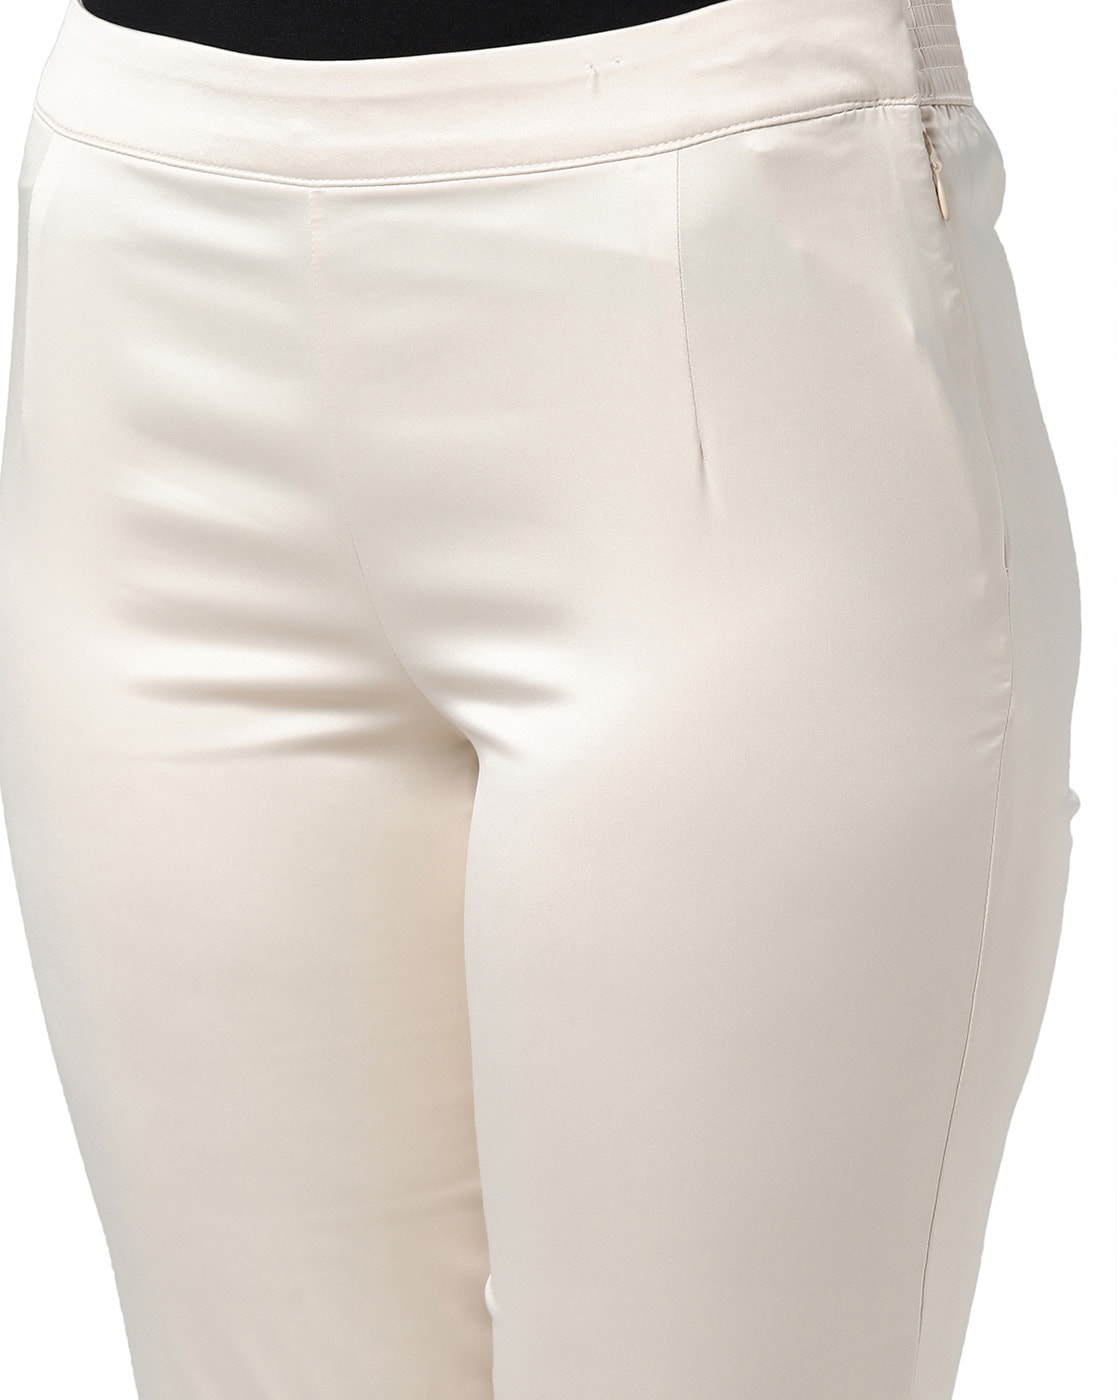 Buy Light Beige Pants for Women by GO COLORS Online